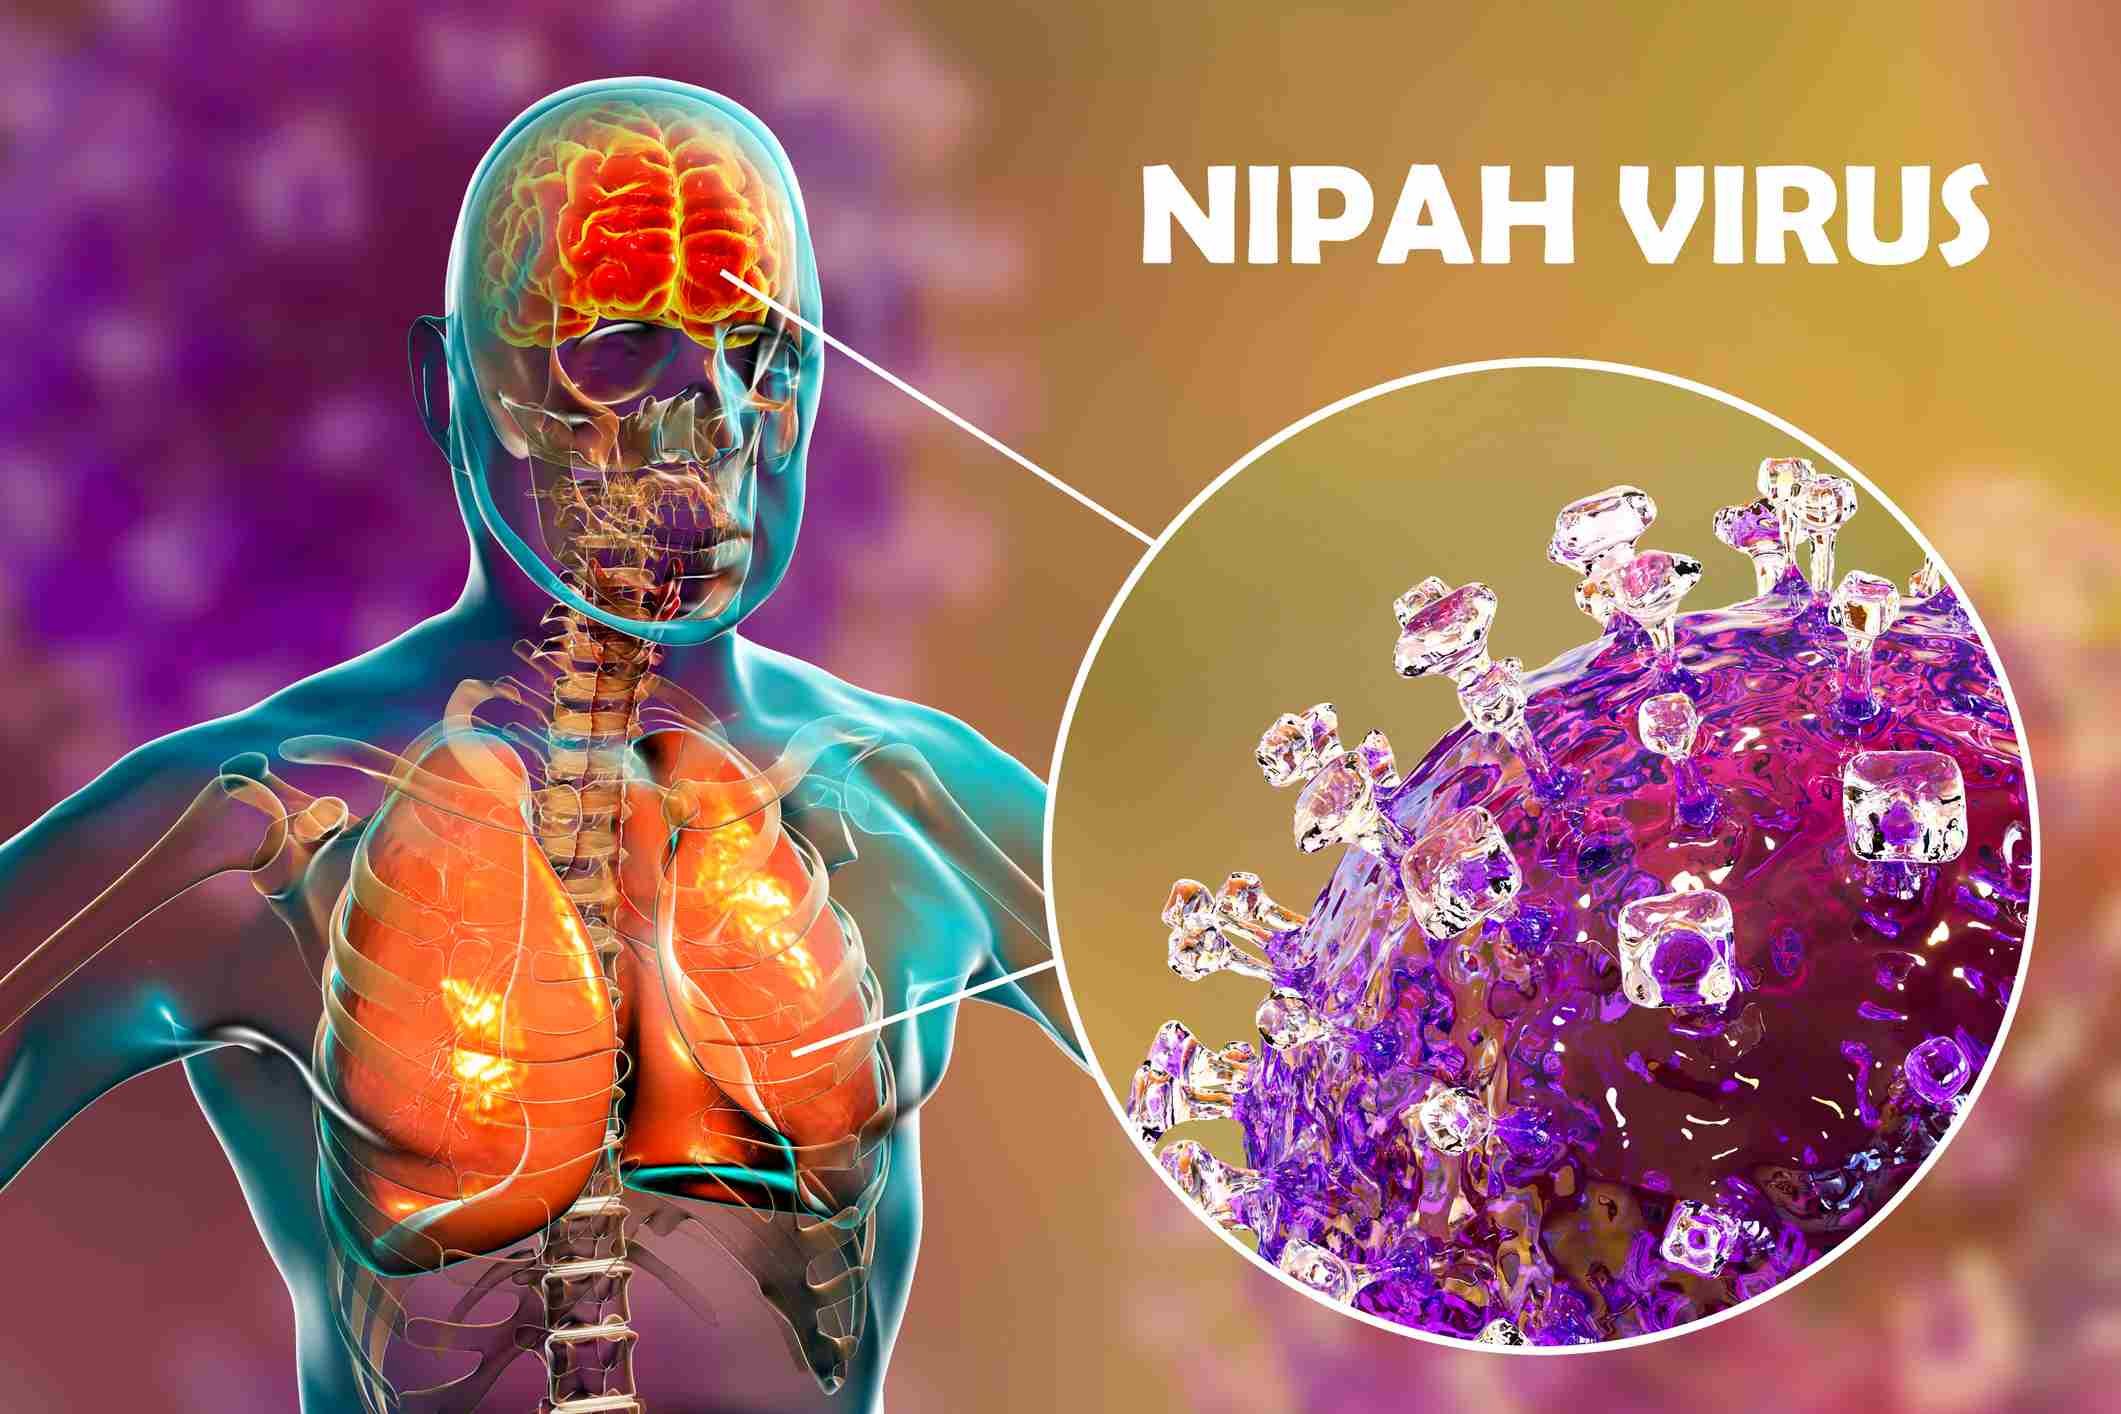 Ilustração do Vírus nipah que vausou lockdown na índia